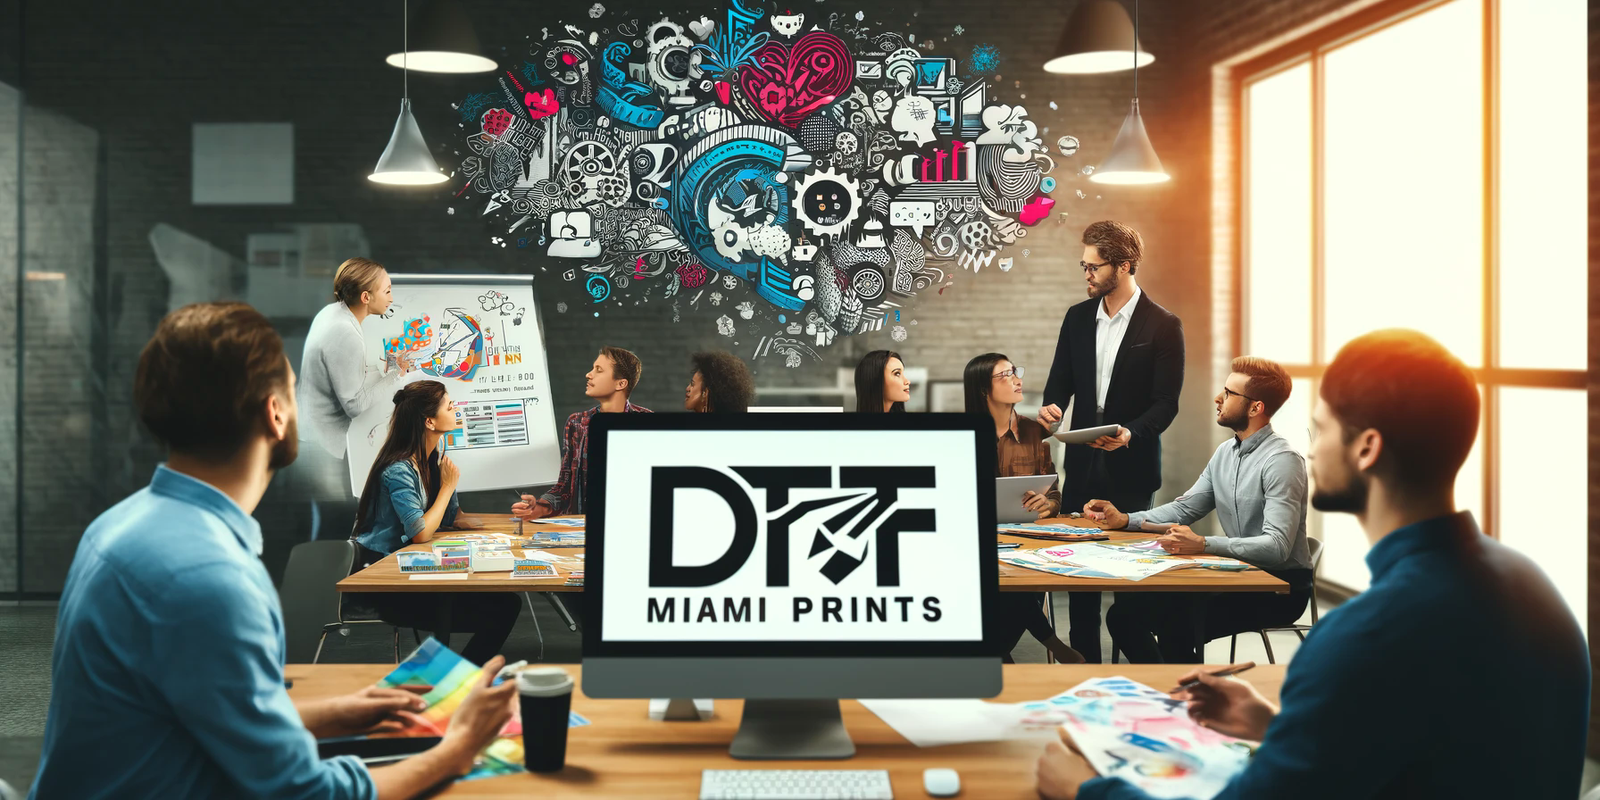 Creative Freedom in Miami with DTF Miami Prints